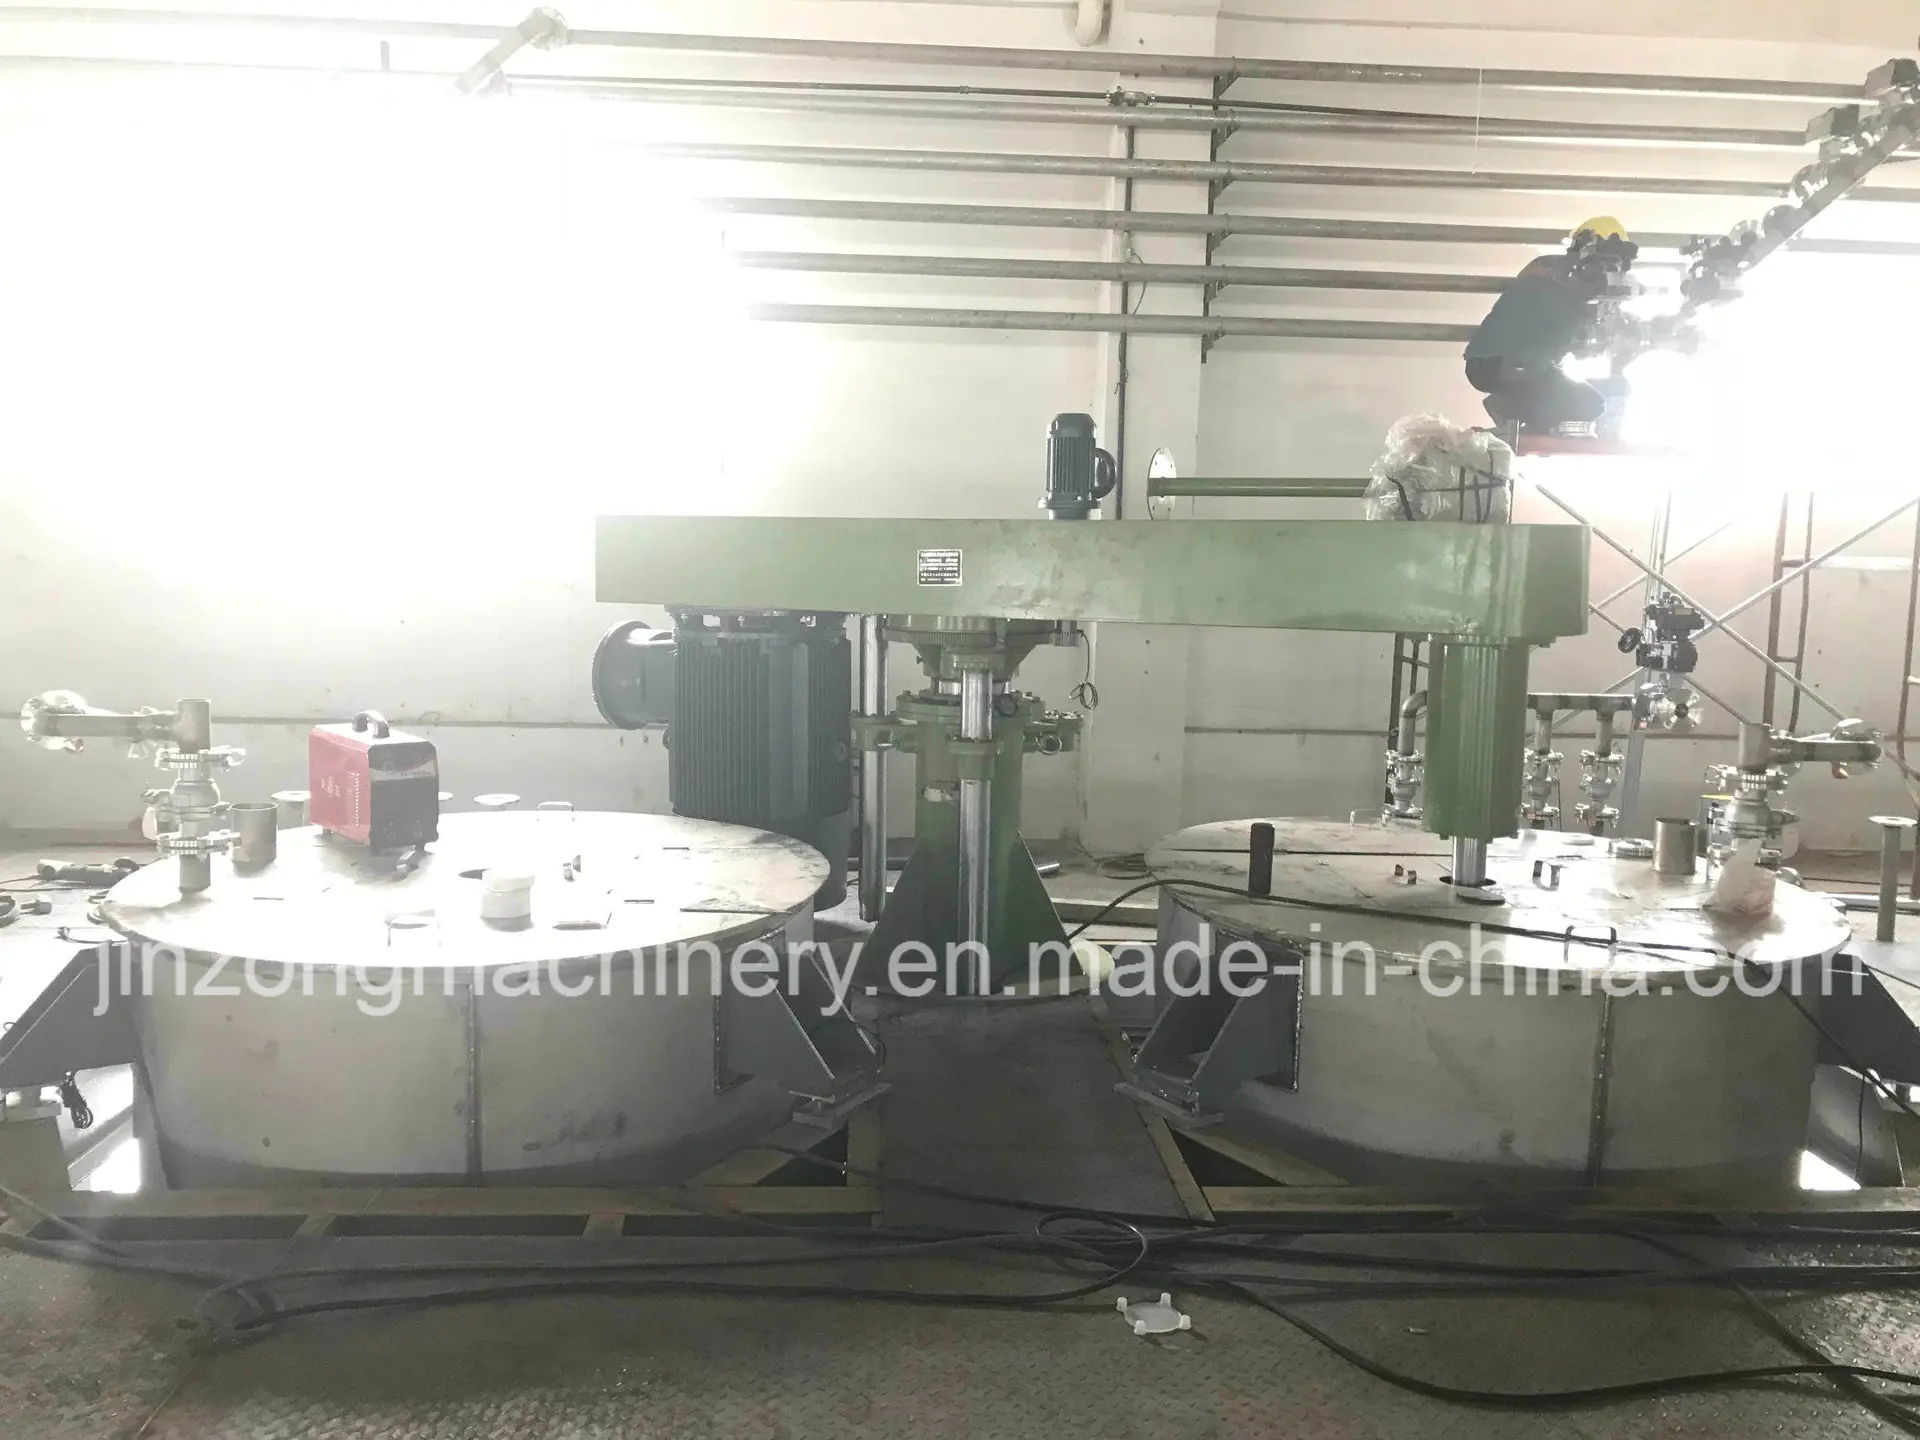 China High Quality Platform Paint Mixer Mixing Making Machine Factory